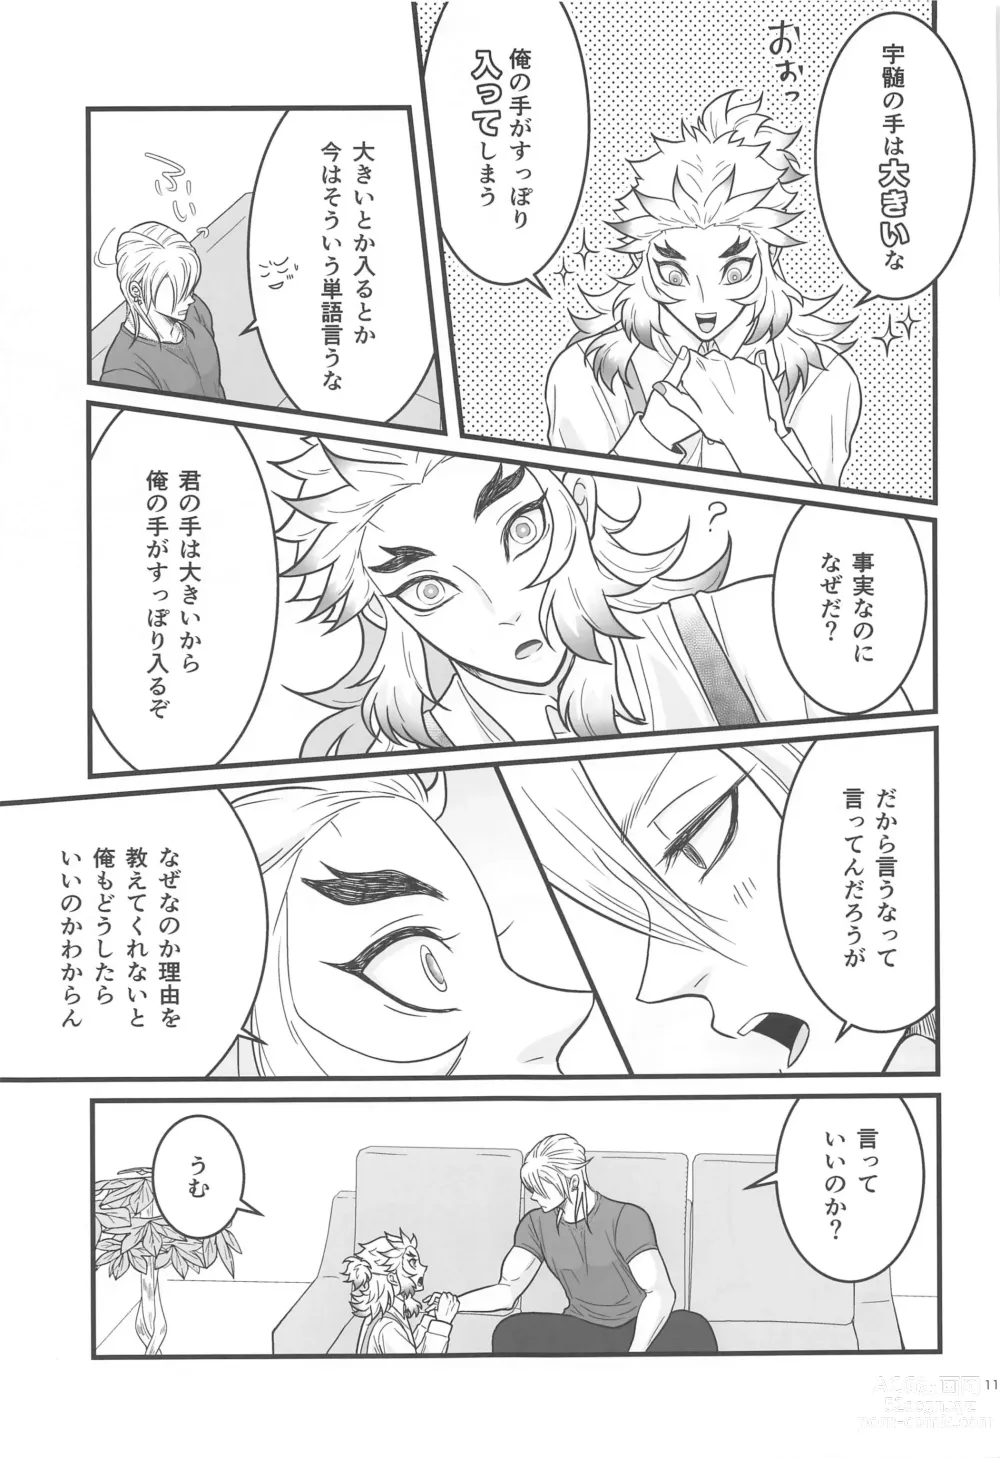 Page 10 of doujinshi Flamboyant Darling